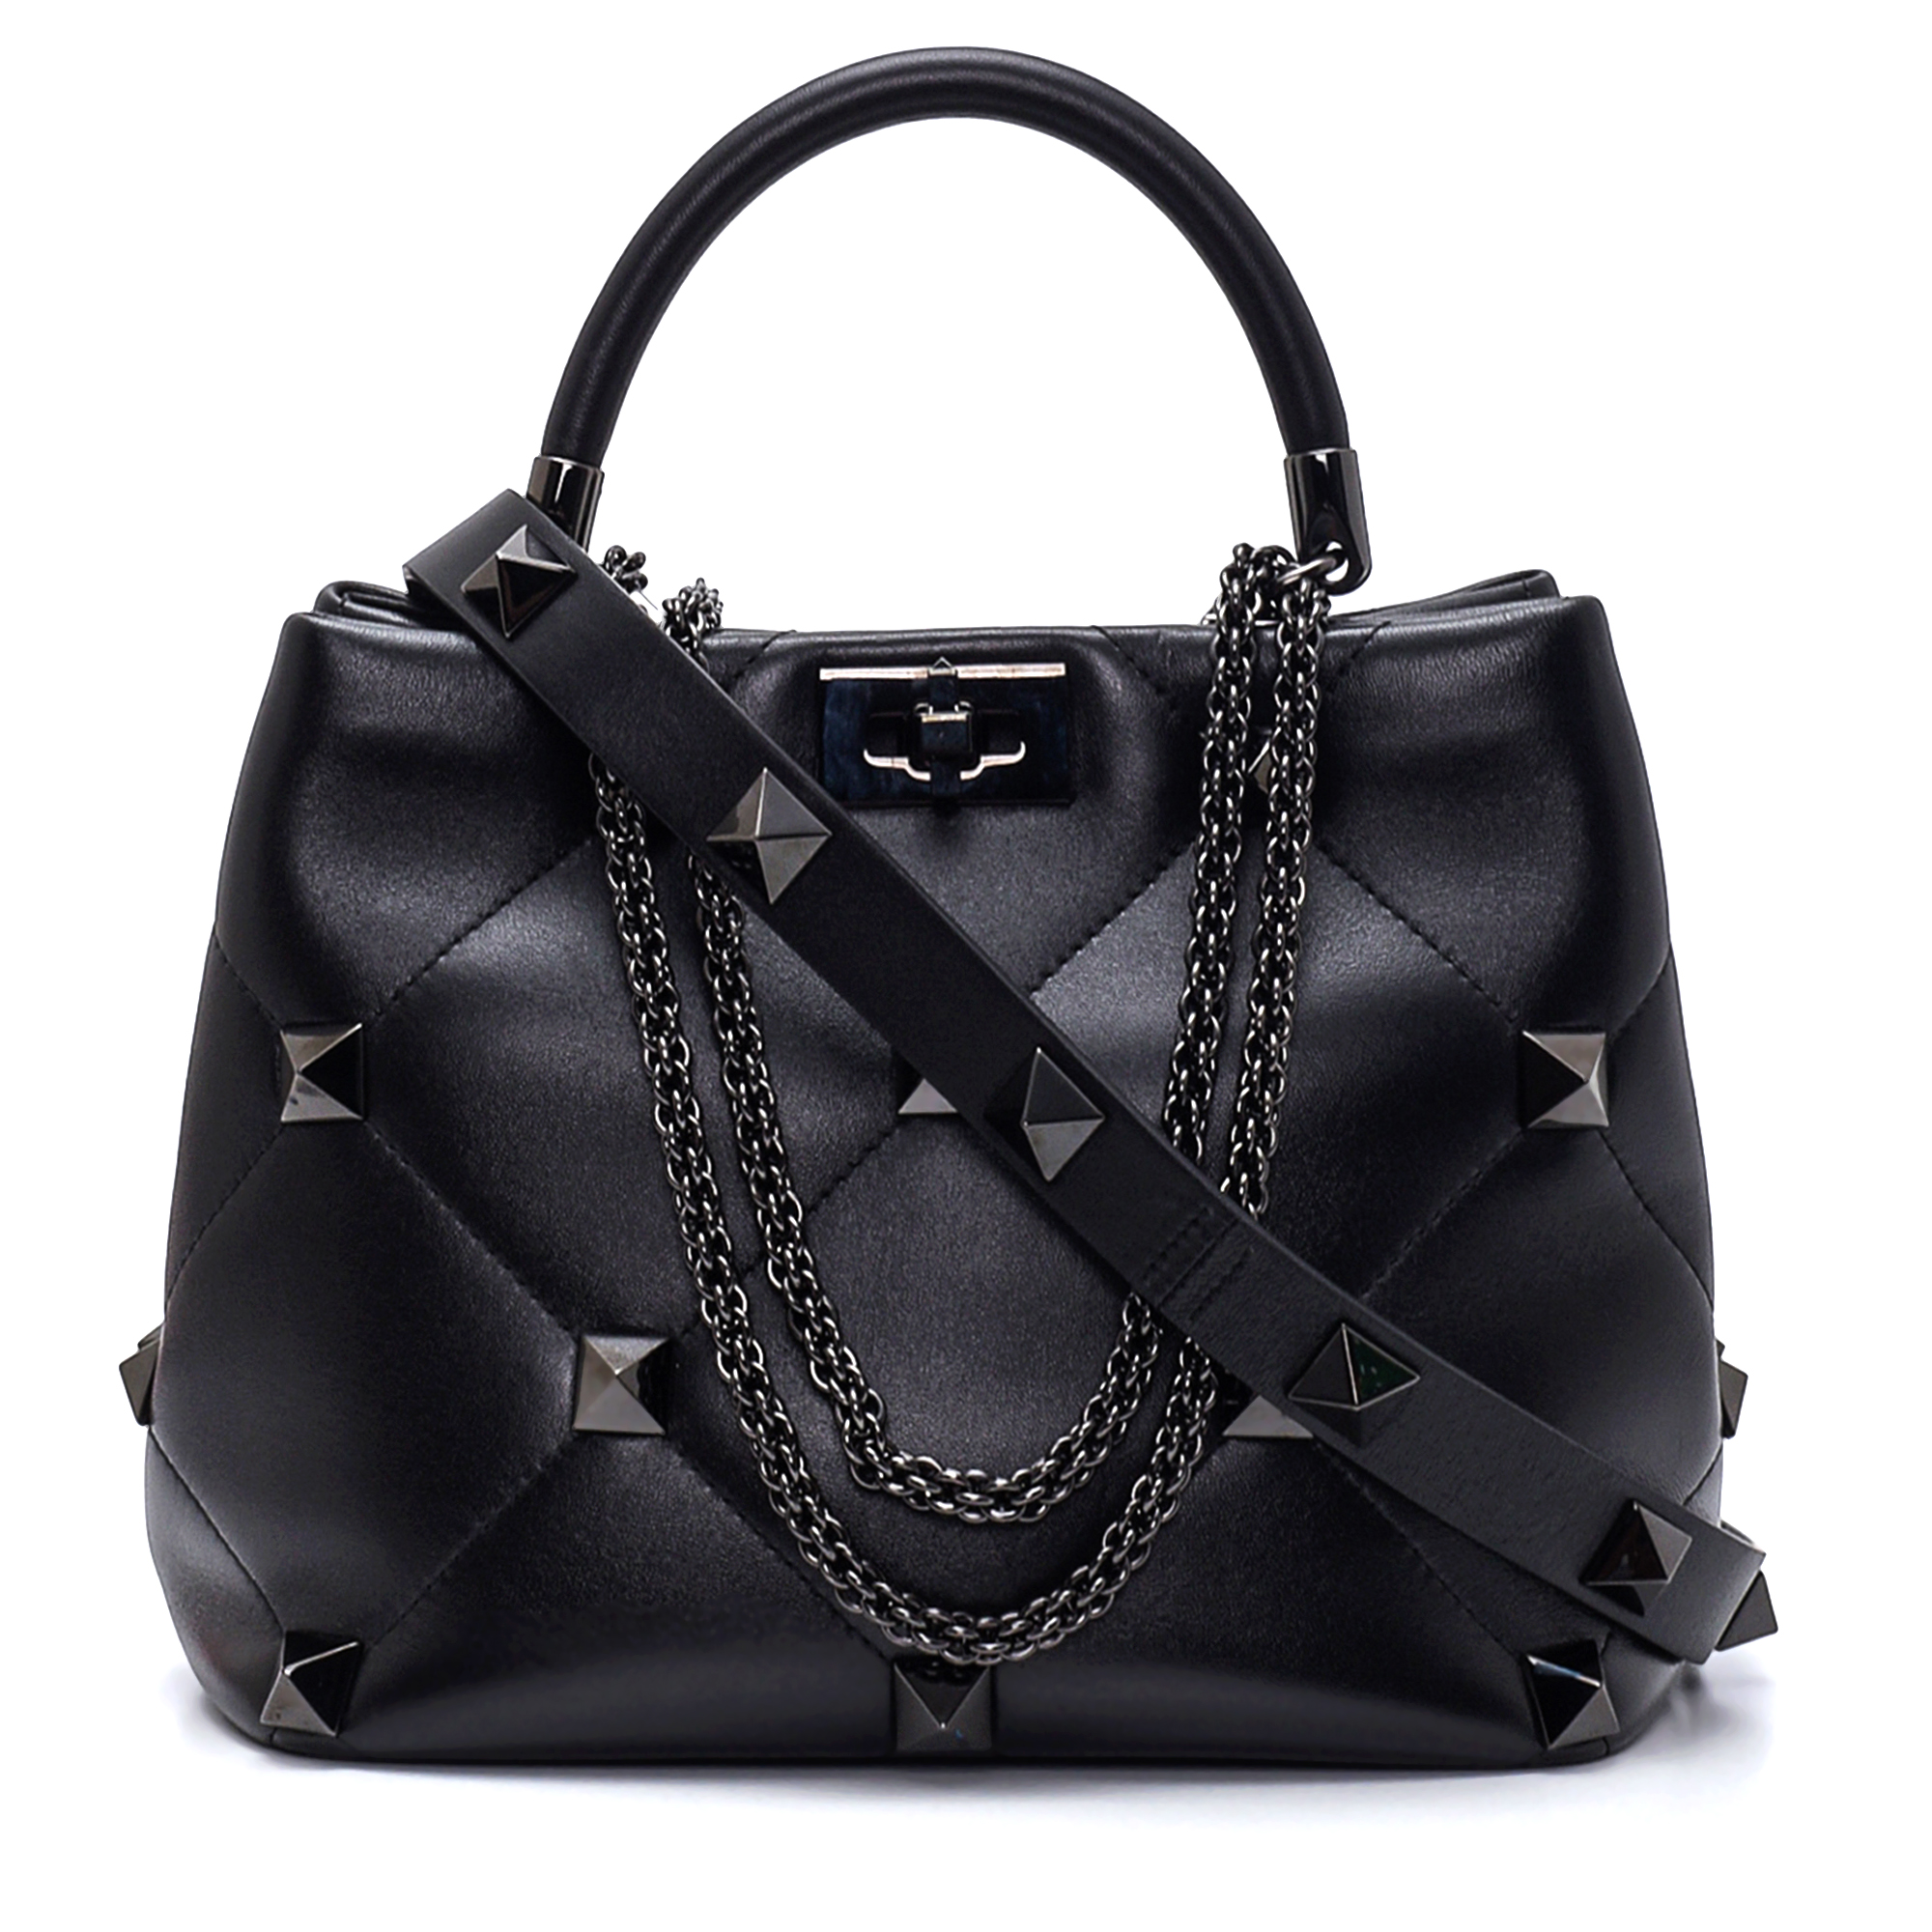 Valentino - Black Lambskin Leather Quilted Medium Stud Roman Bag